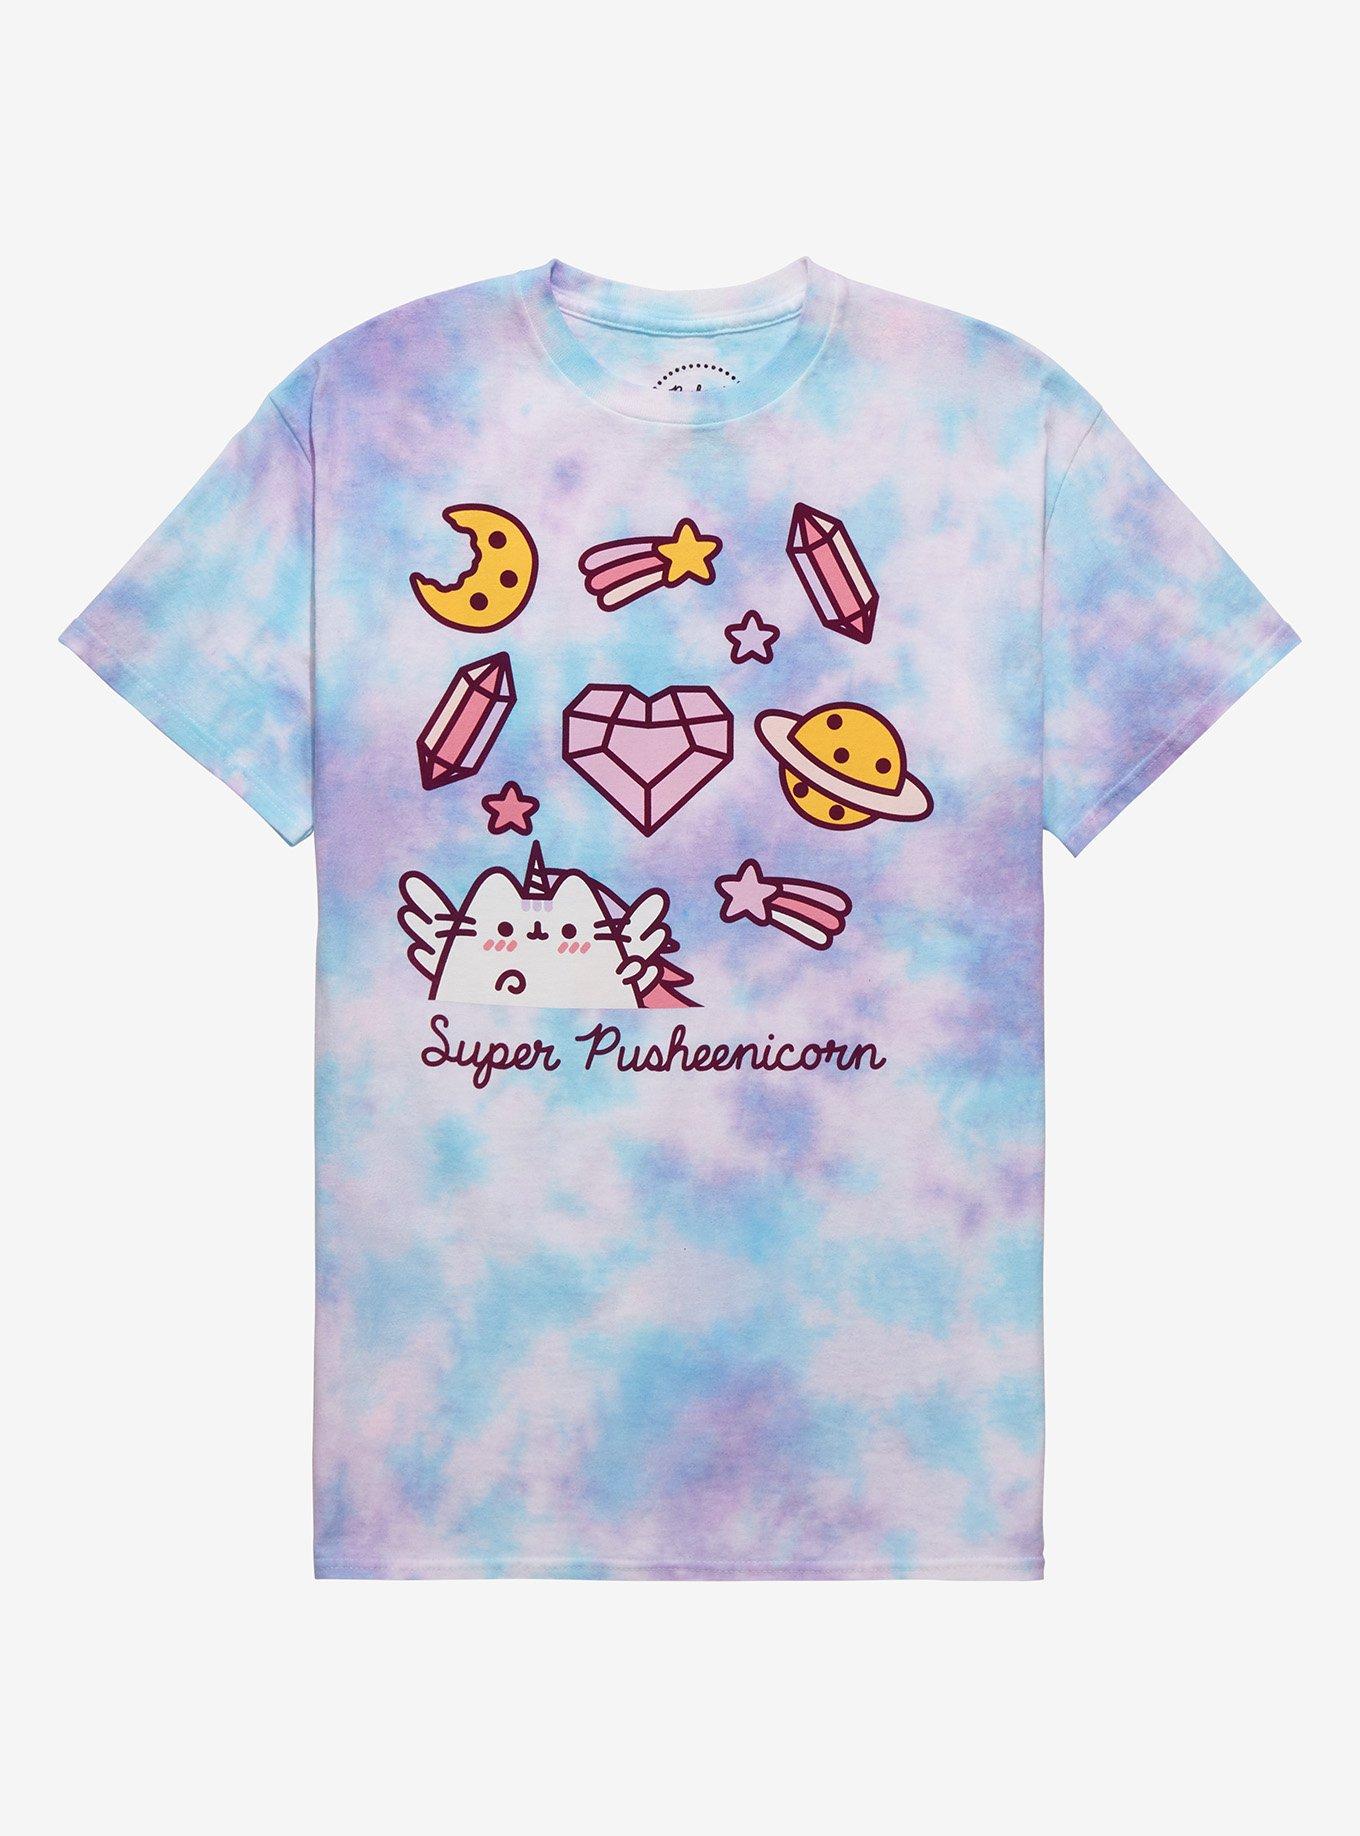 Pusheen Unicorn Tie-Dye Boyfriend Fit Girls T-Shirt